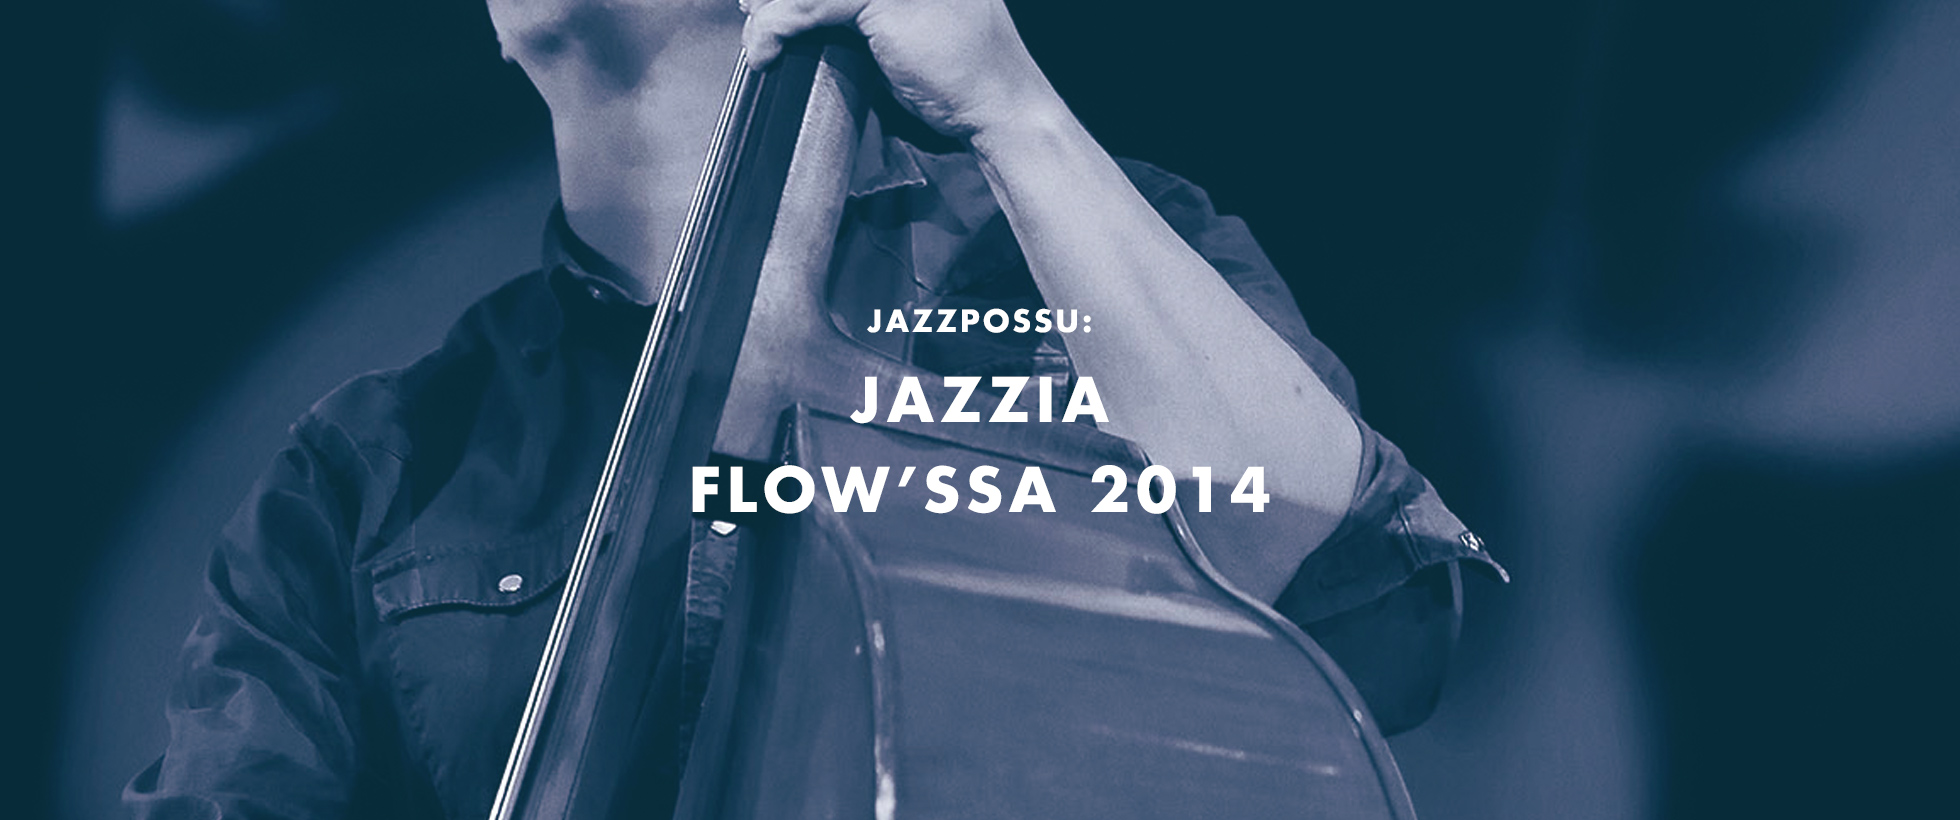 Jazzia Flow’ssa 2014